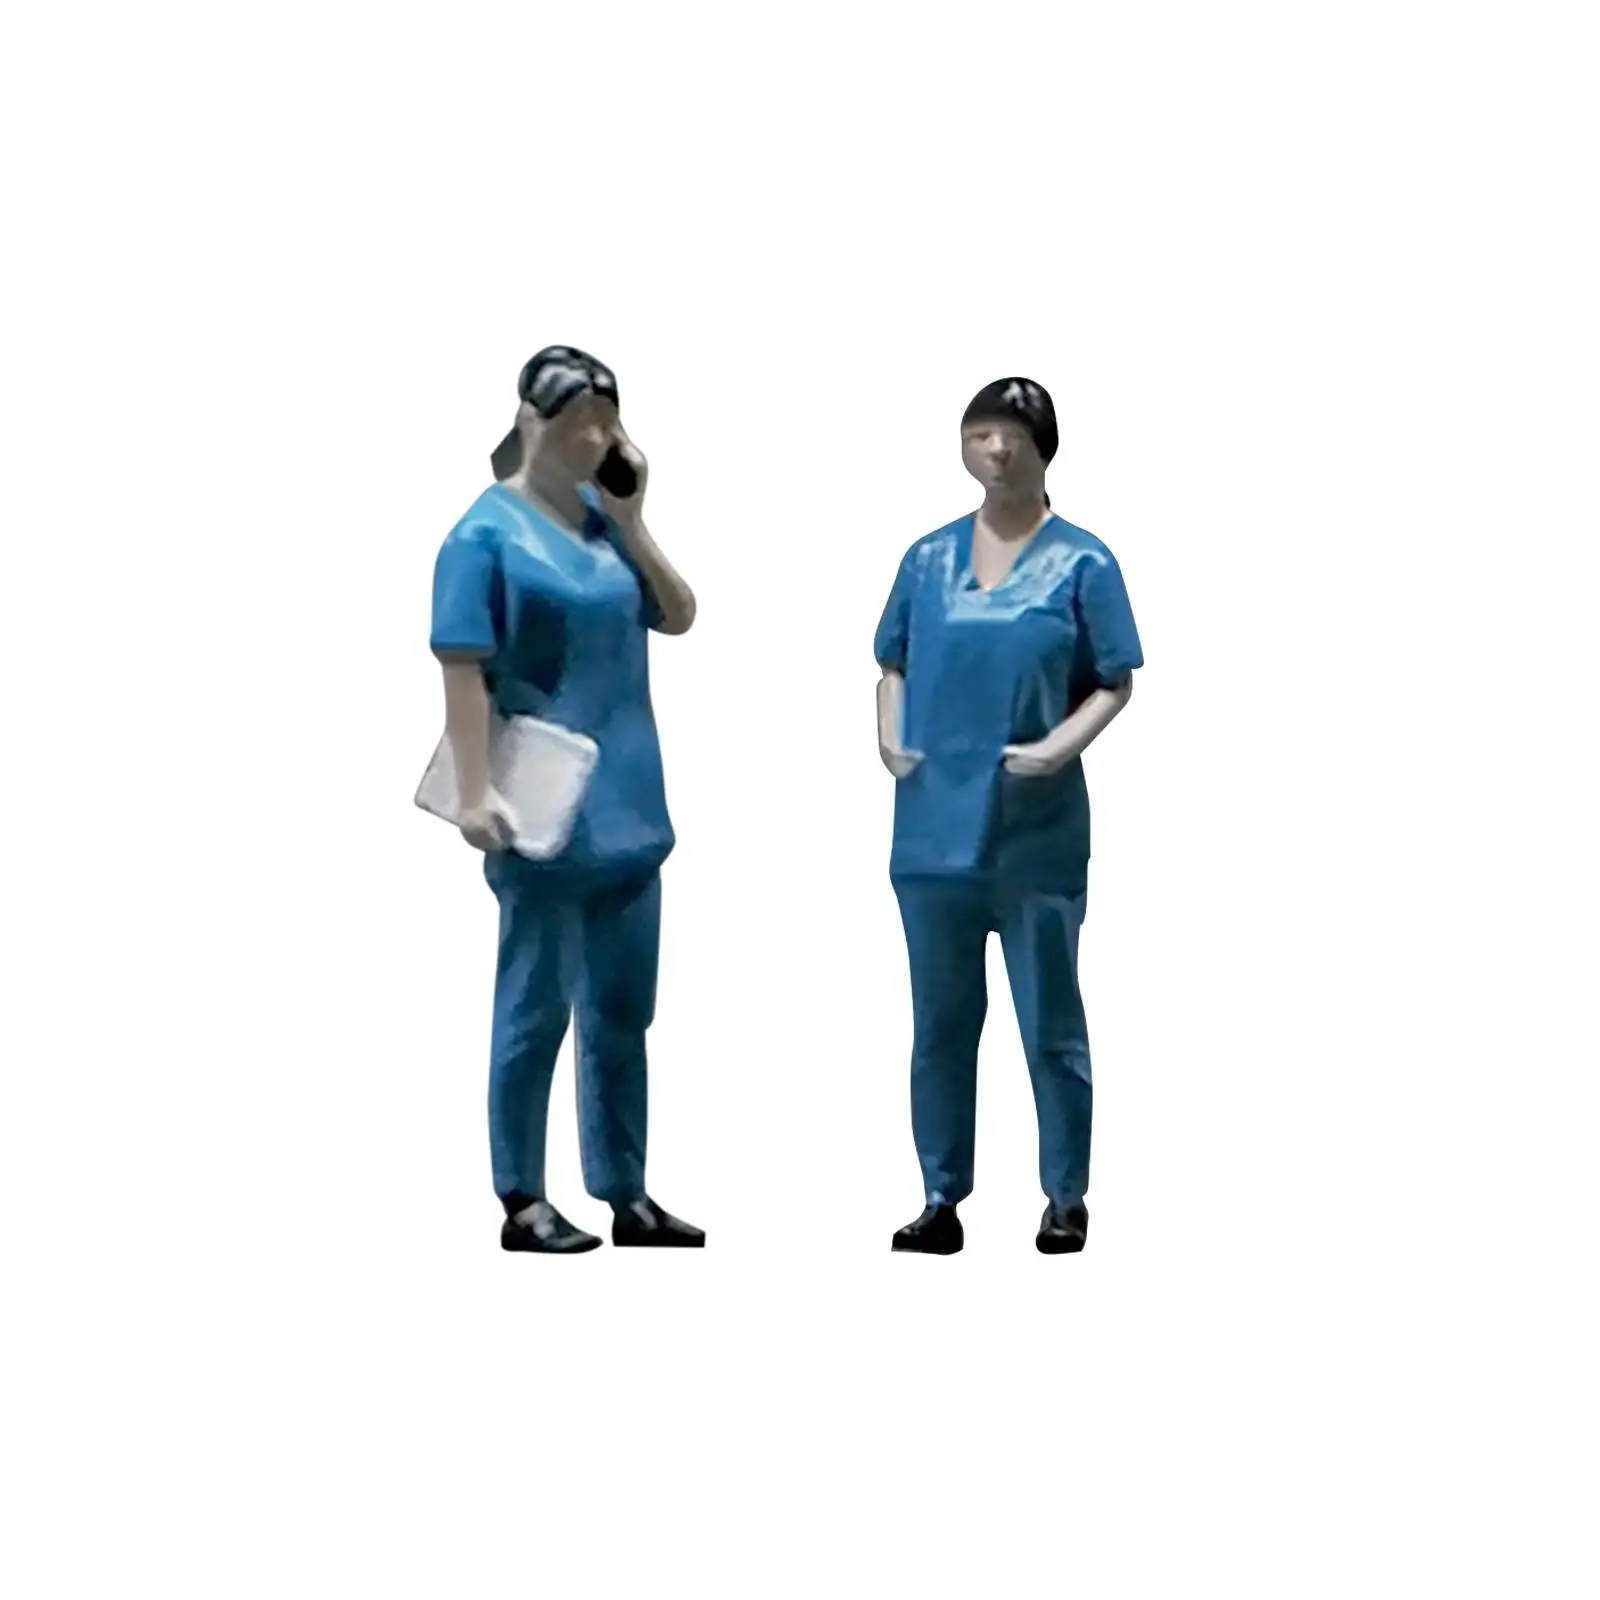 Resin 1:64 People Figurine Tiny Accessories Figure Model for Scenes Train